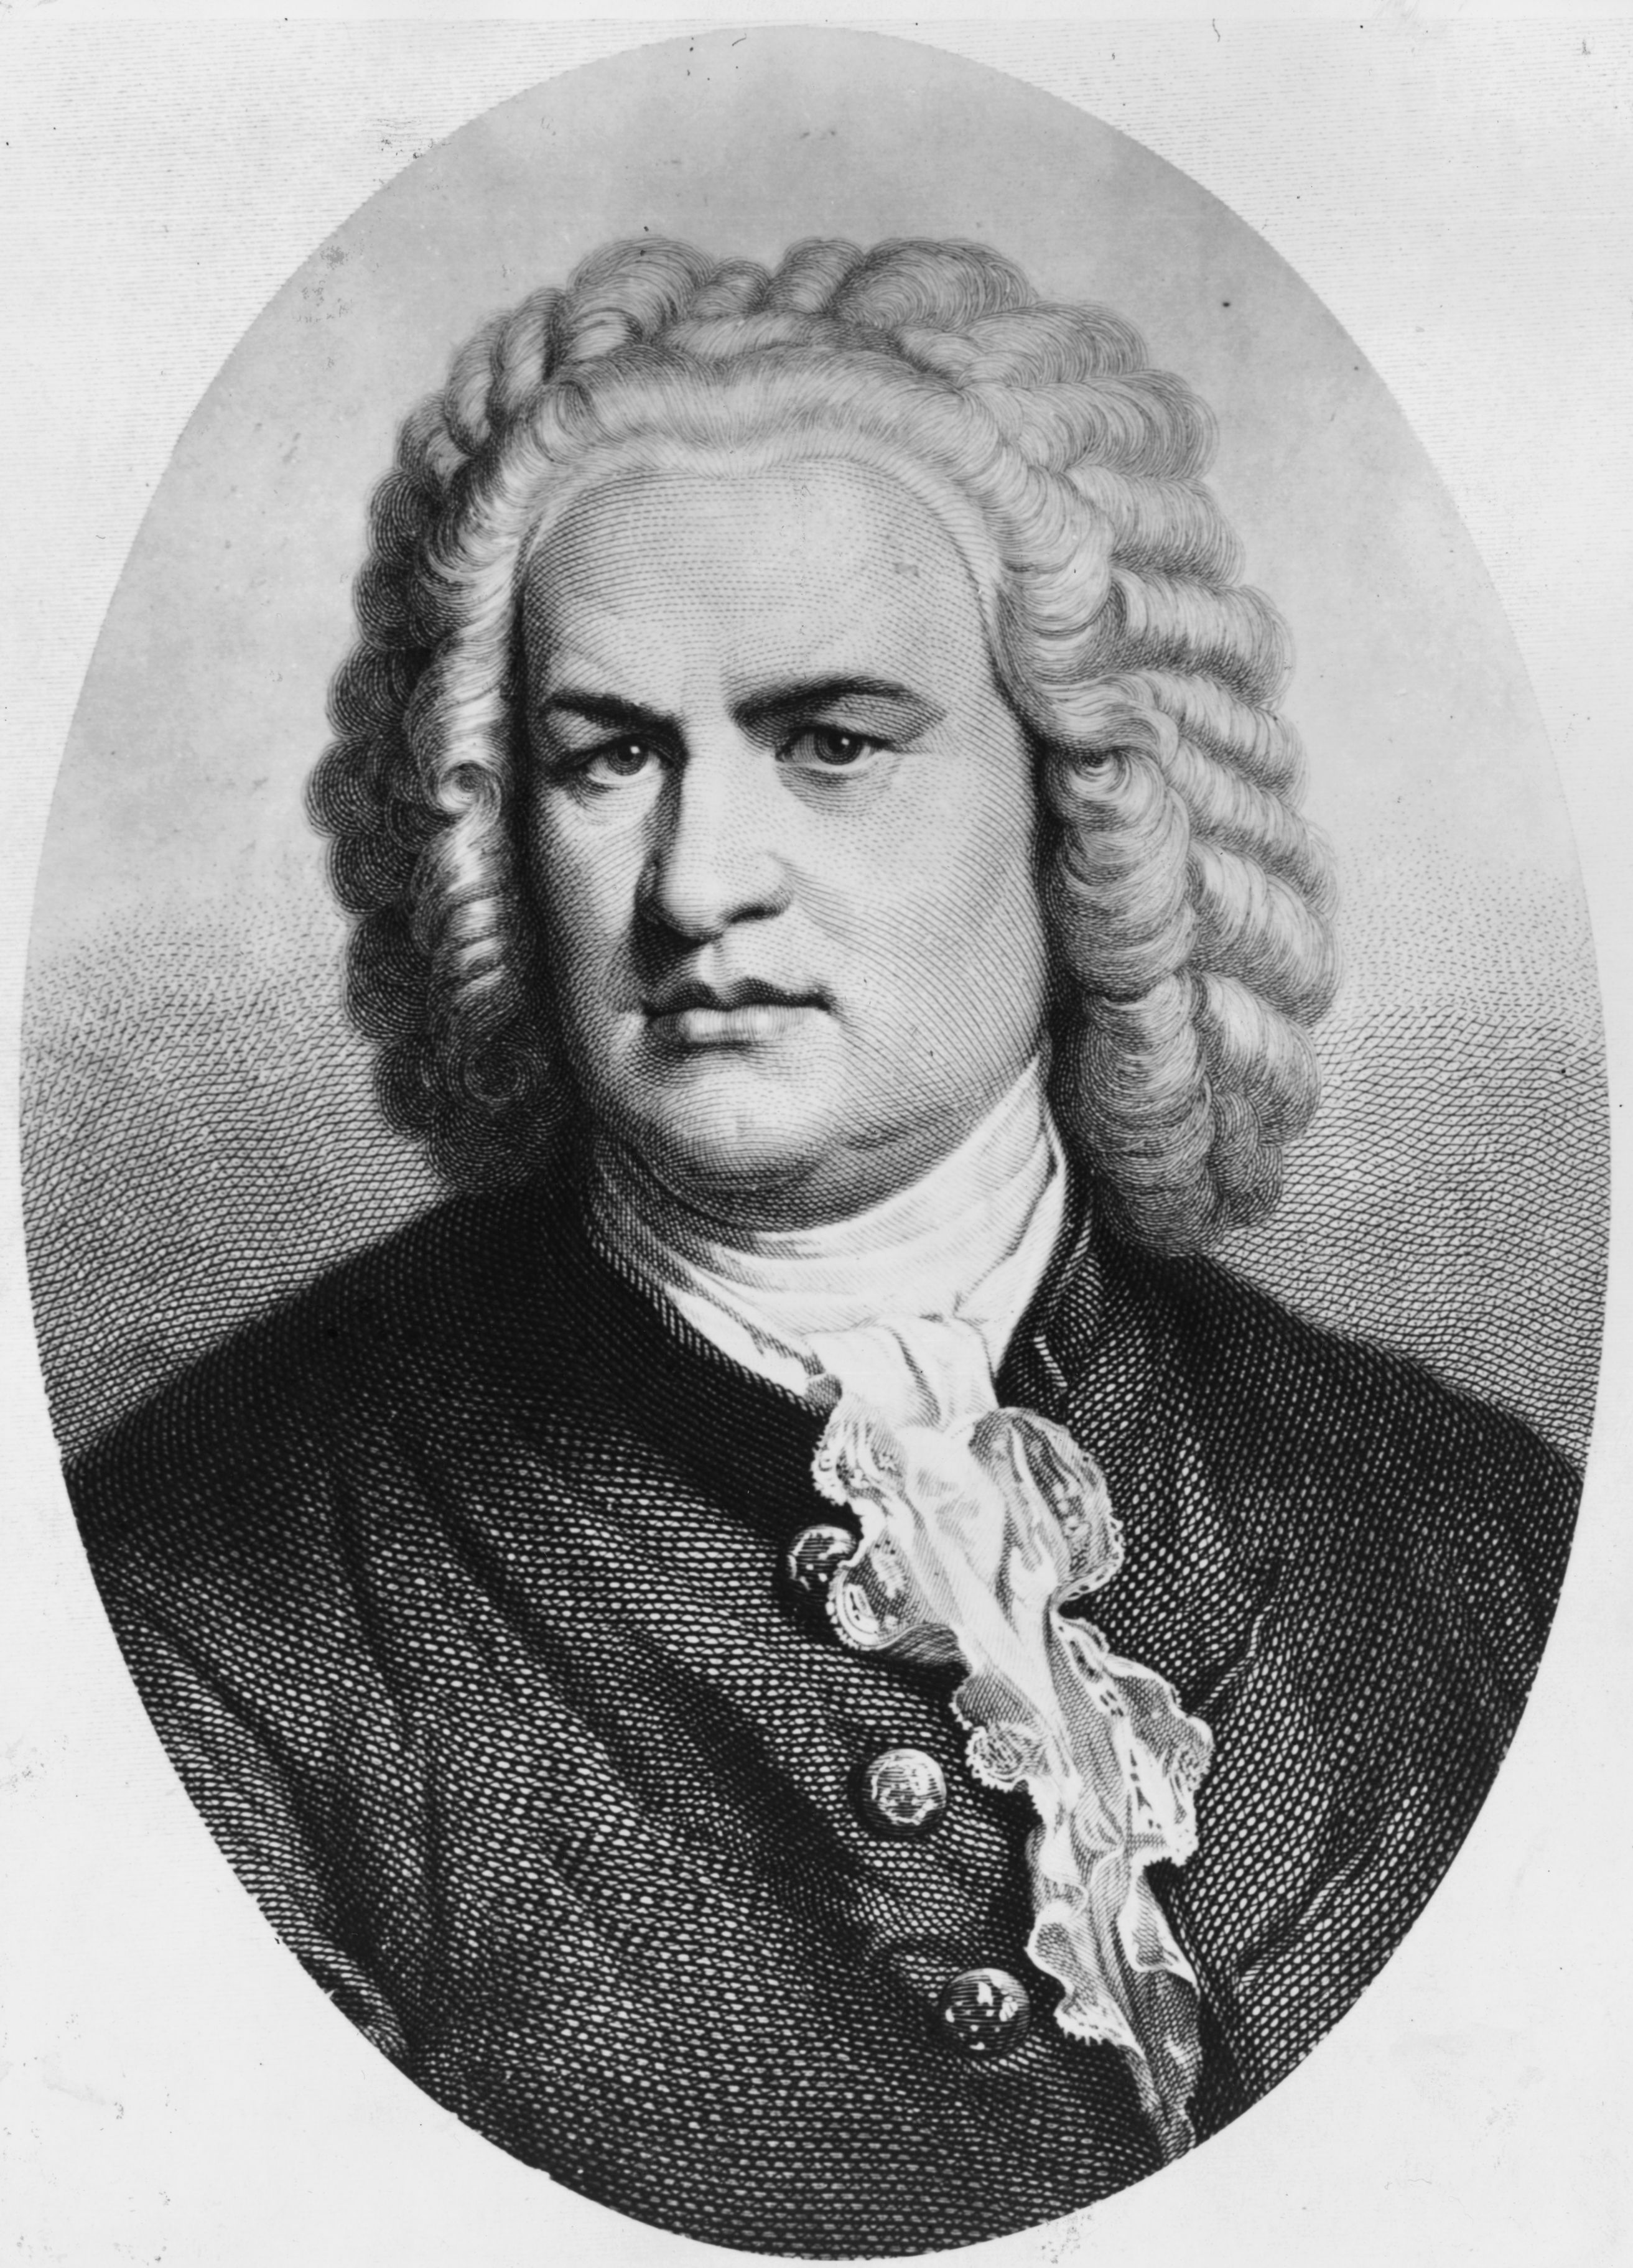 BACH Portrait - Johann Sebastian Bach